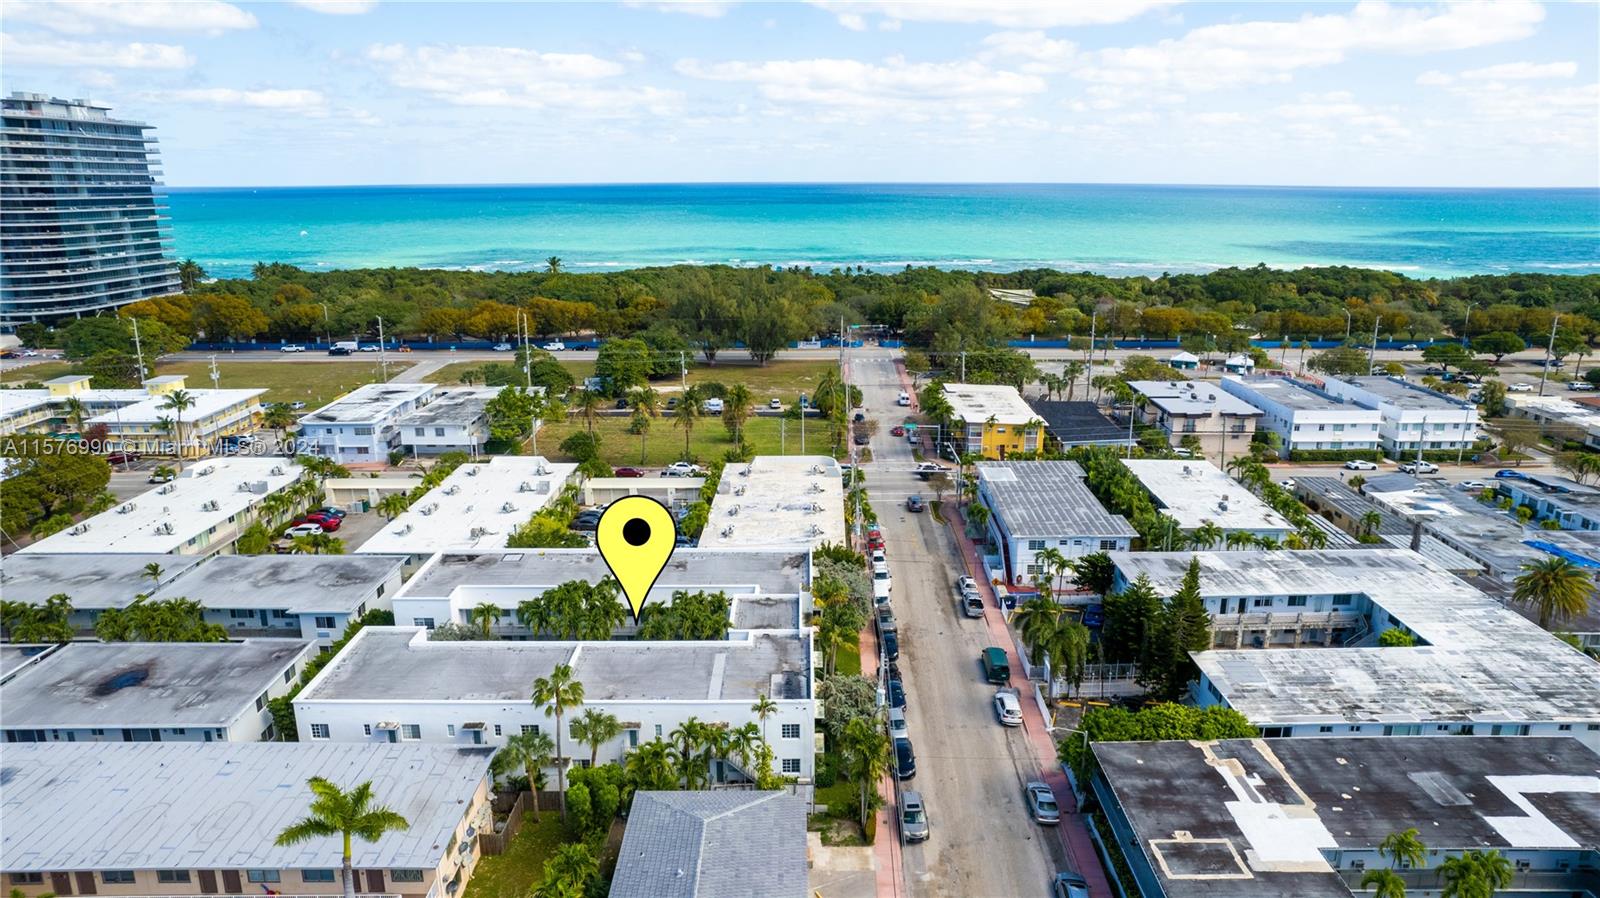 Rental Property at 331 85th St 4, Miami Beach, Miami-Dade County, Florida - Bedrooms: 1 
Bathrooms: 1  - $1,900 MO.